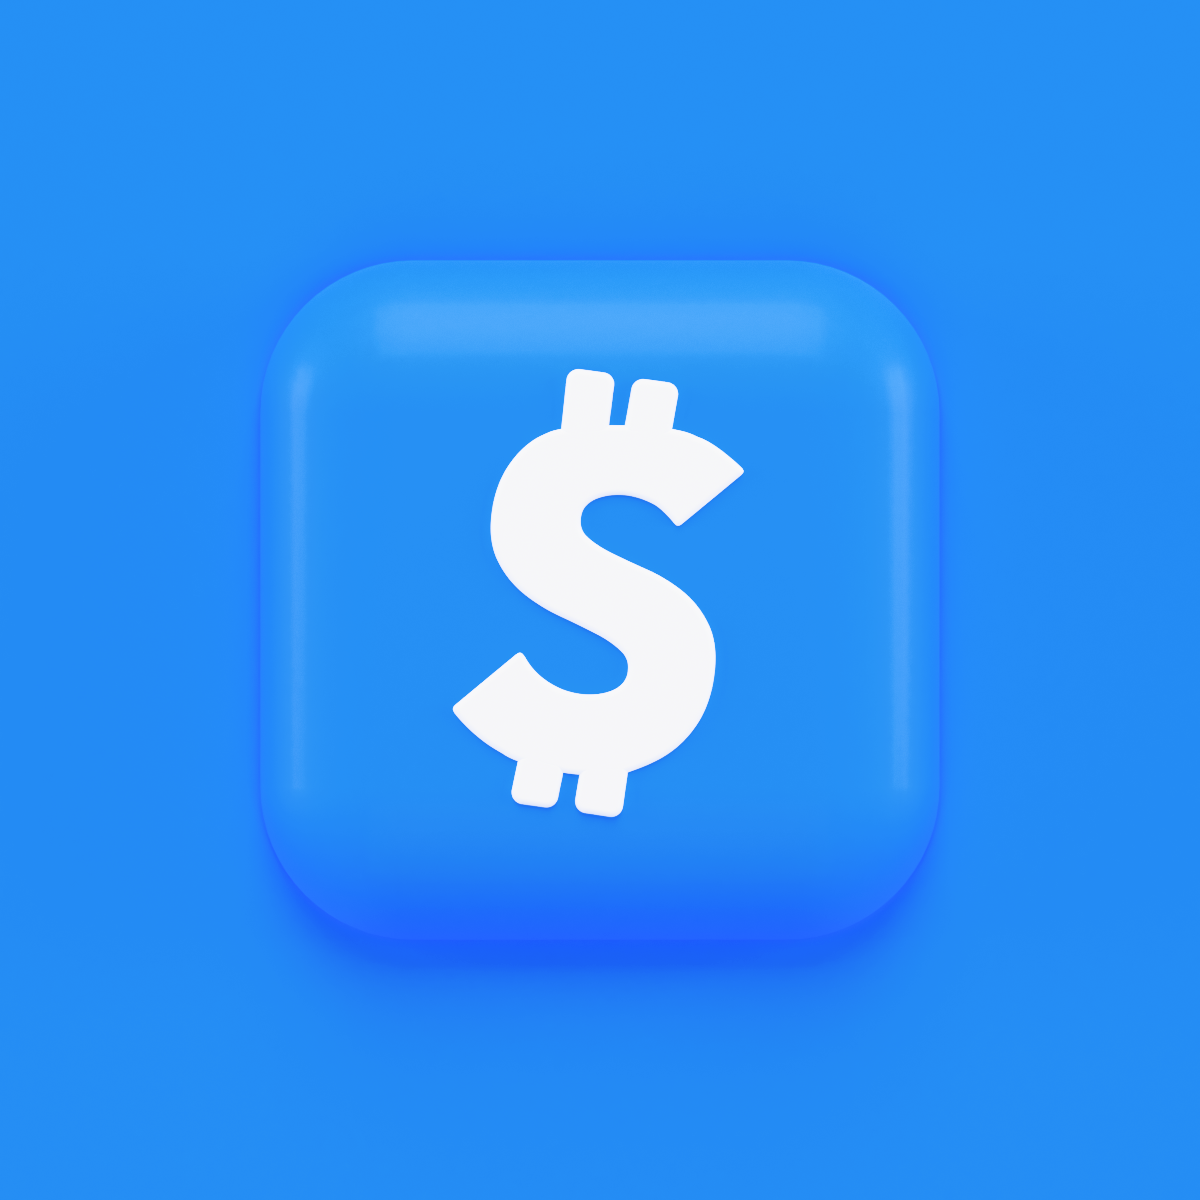 sMiles bitcoin app - take steps to earn sats